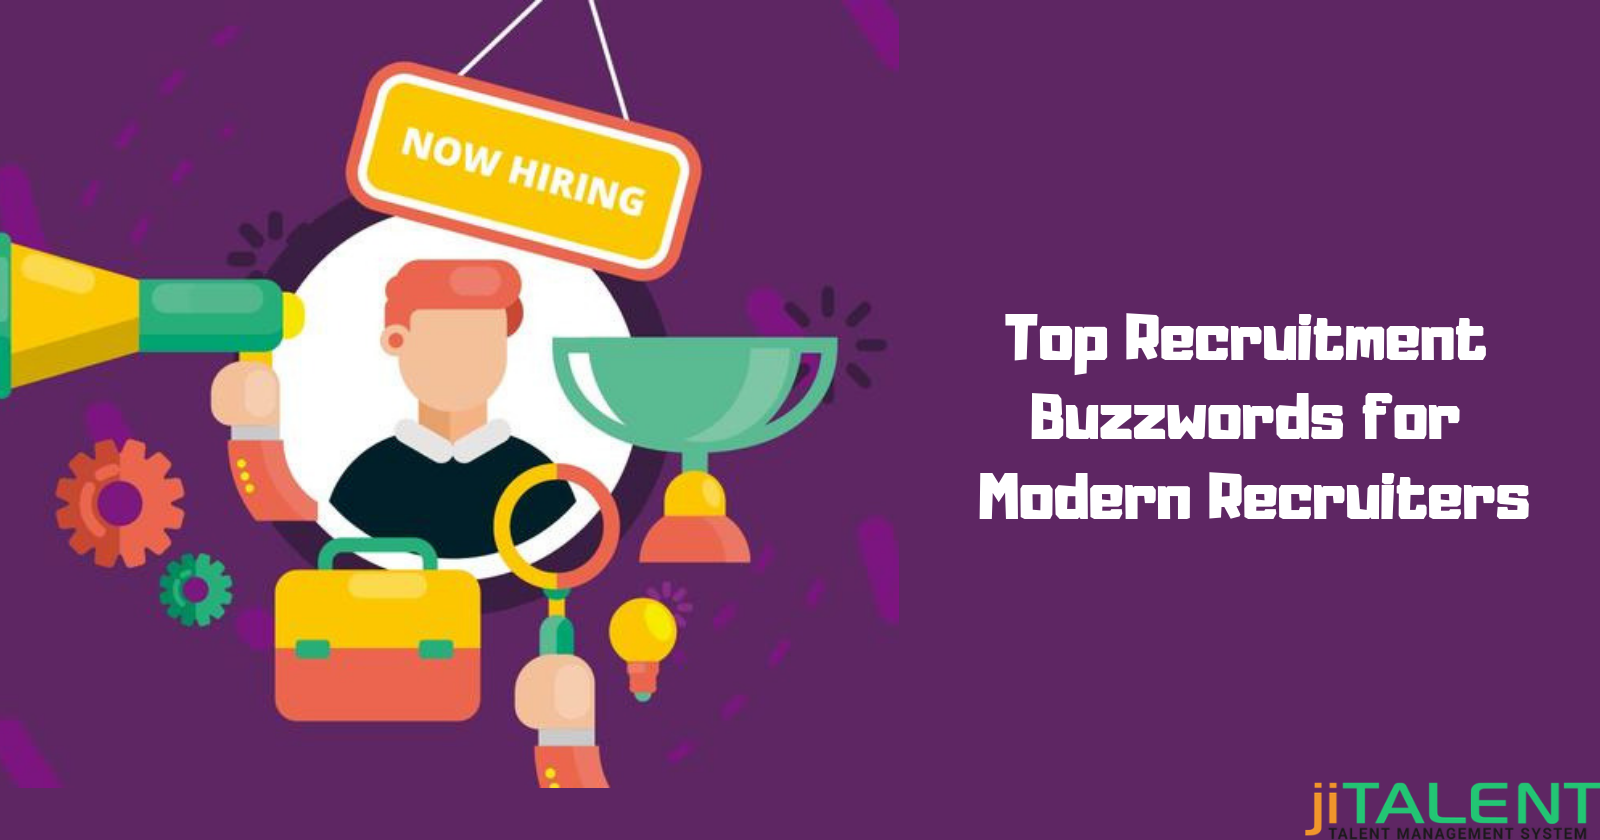 Top Recruitment Buzzwords for Modern Recruiters